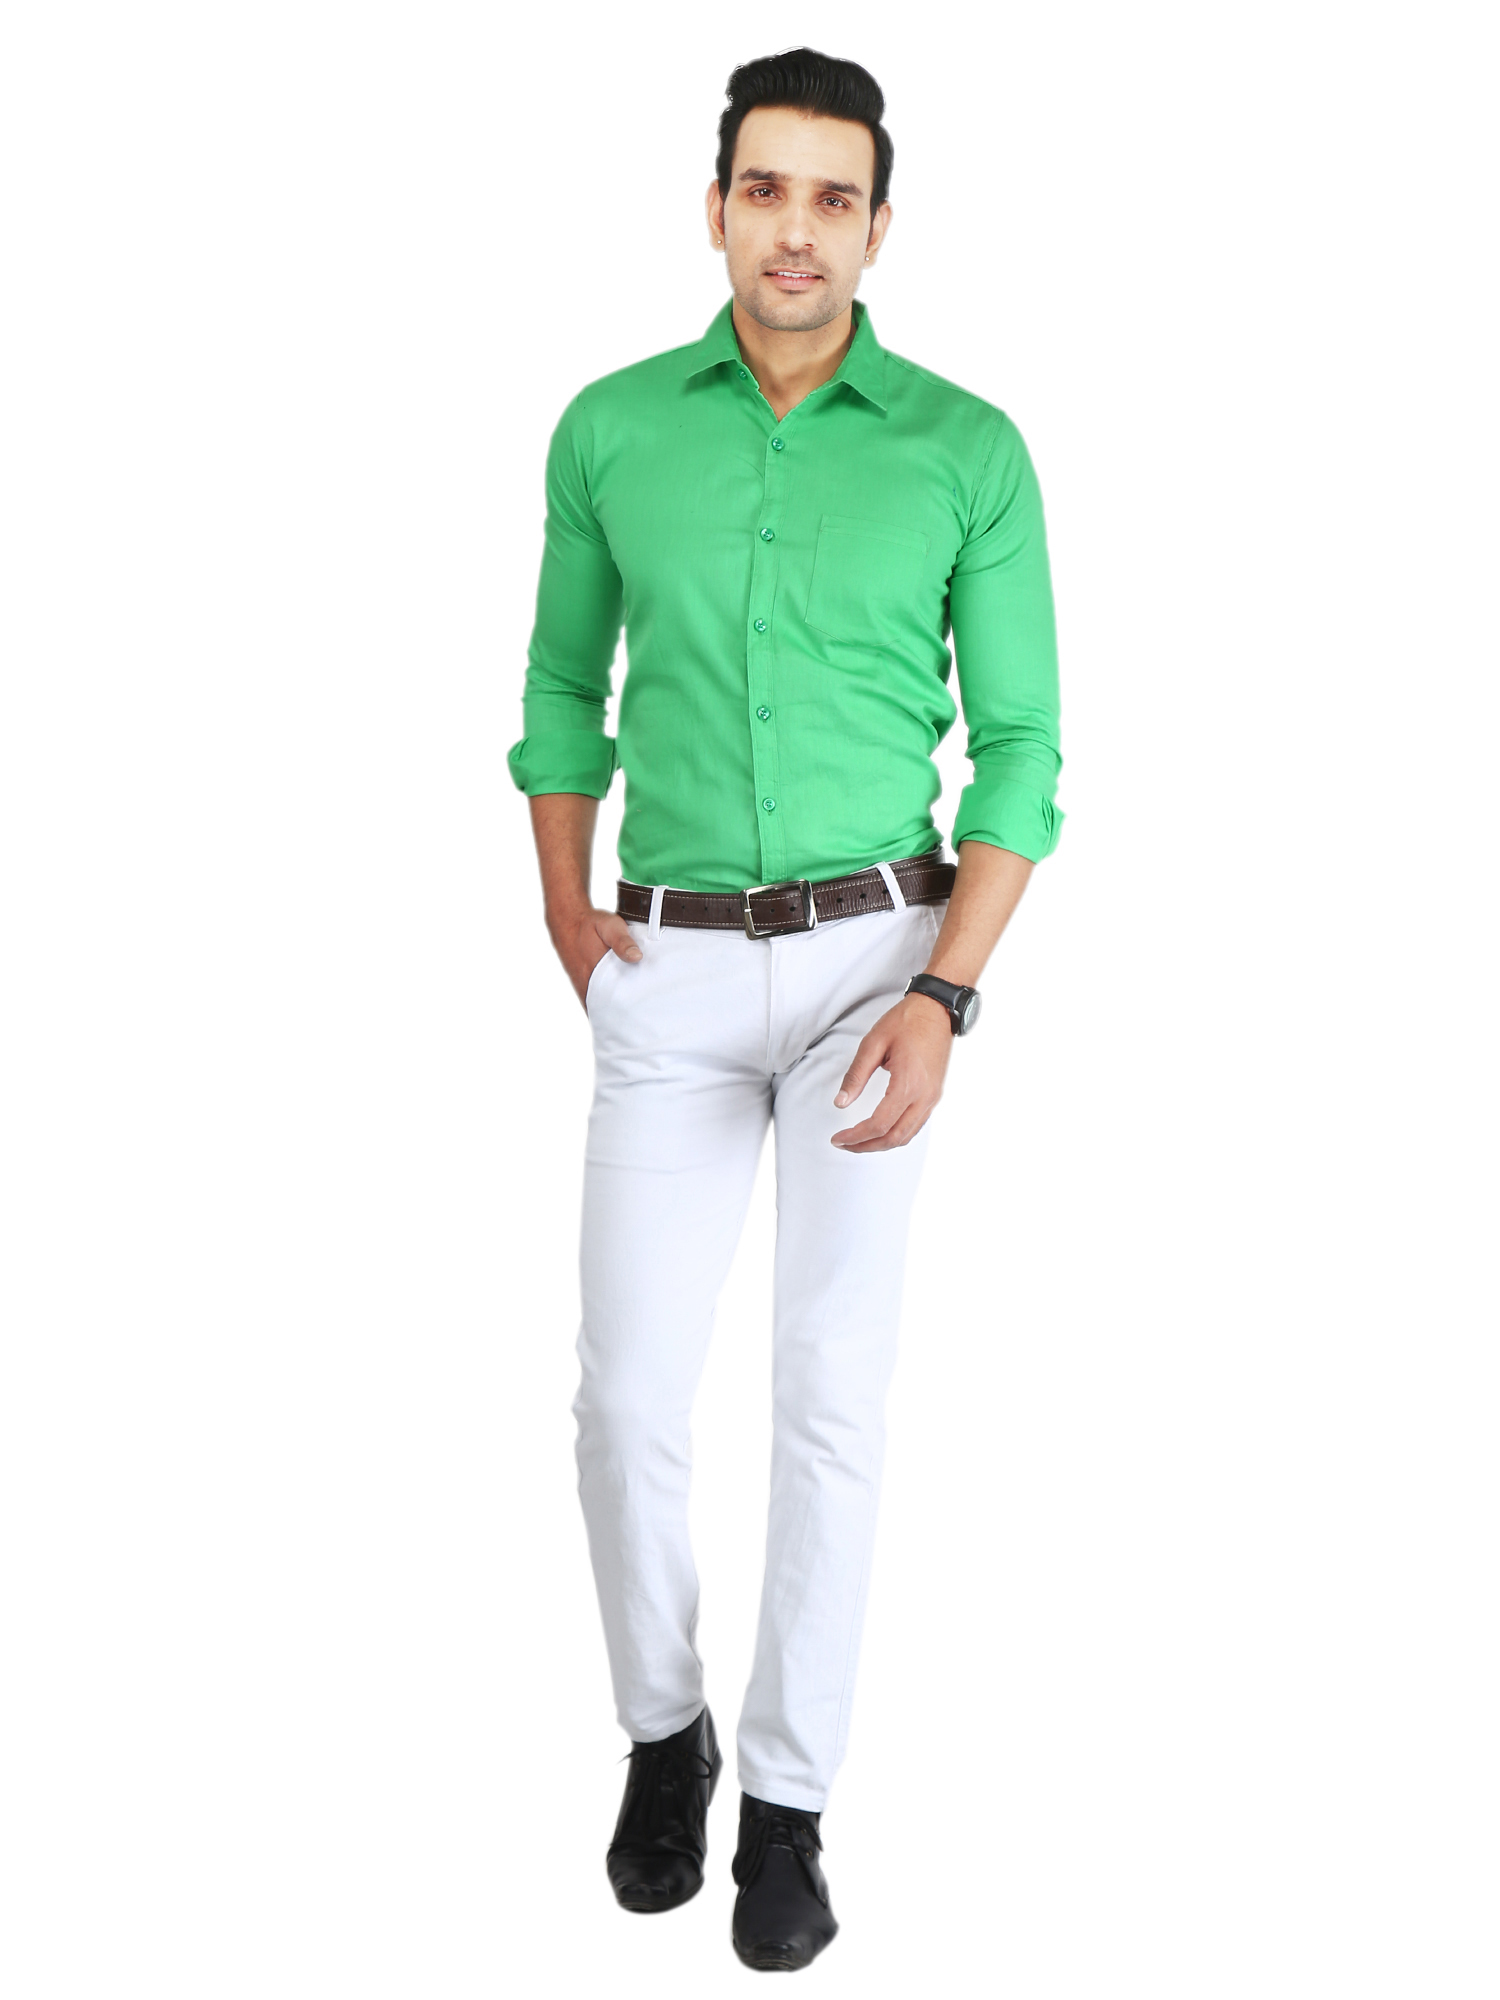 Buy Green Plain Shirt for Mens Online @ ₹899 from ShopClues